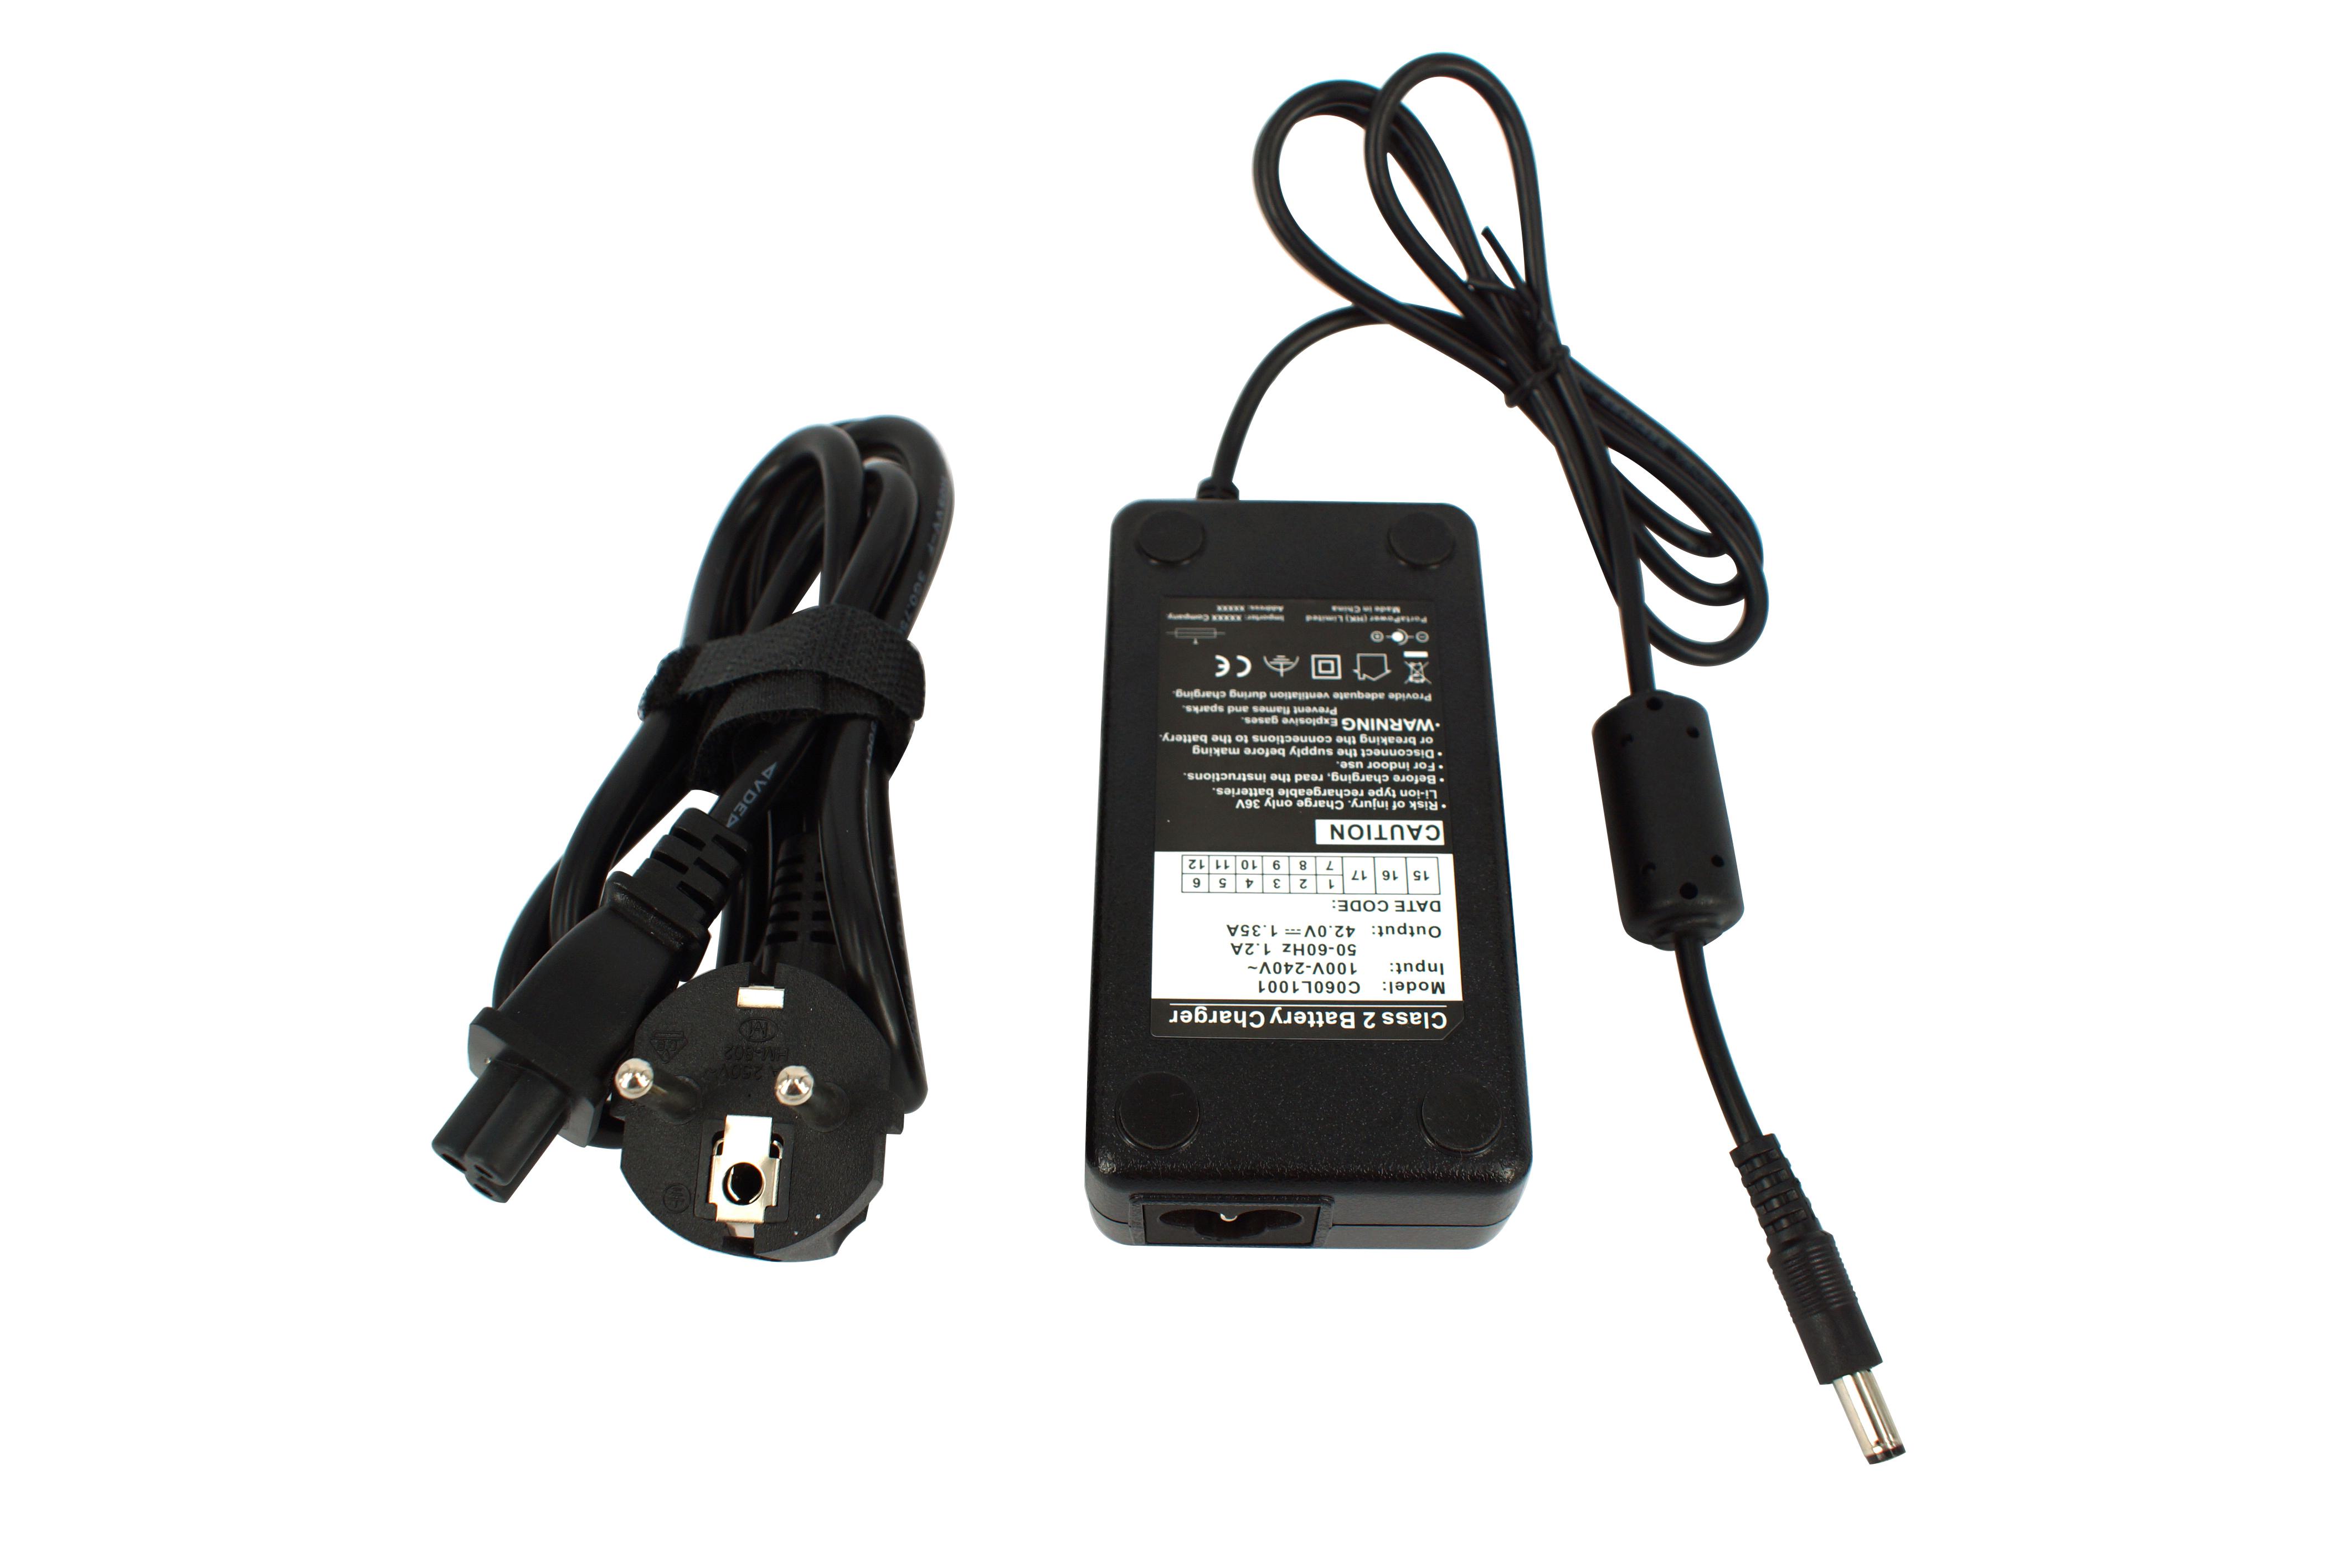 PowerSmart CM080L1002E.001 Batterie-Ladegerät (2,0 A (Ausgangsstrom) für  36V Elektrofahrrad, 42V (Ausgang), für Bafang BCB301, BCB201)